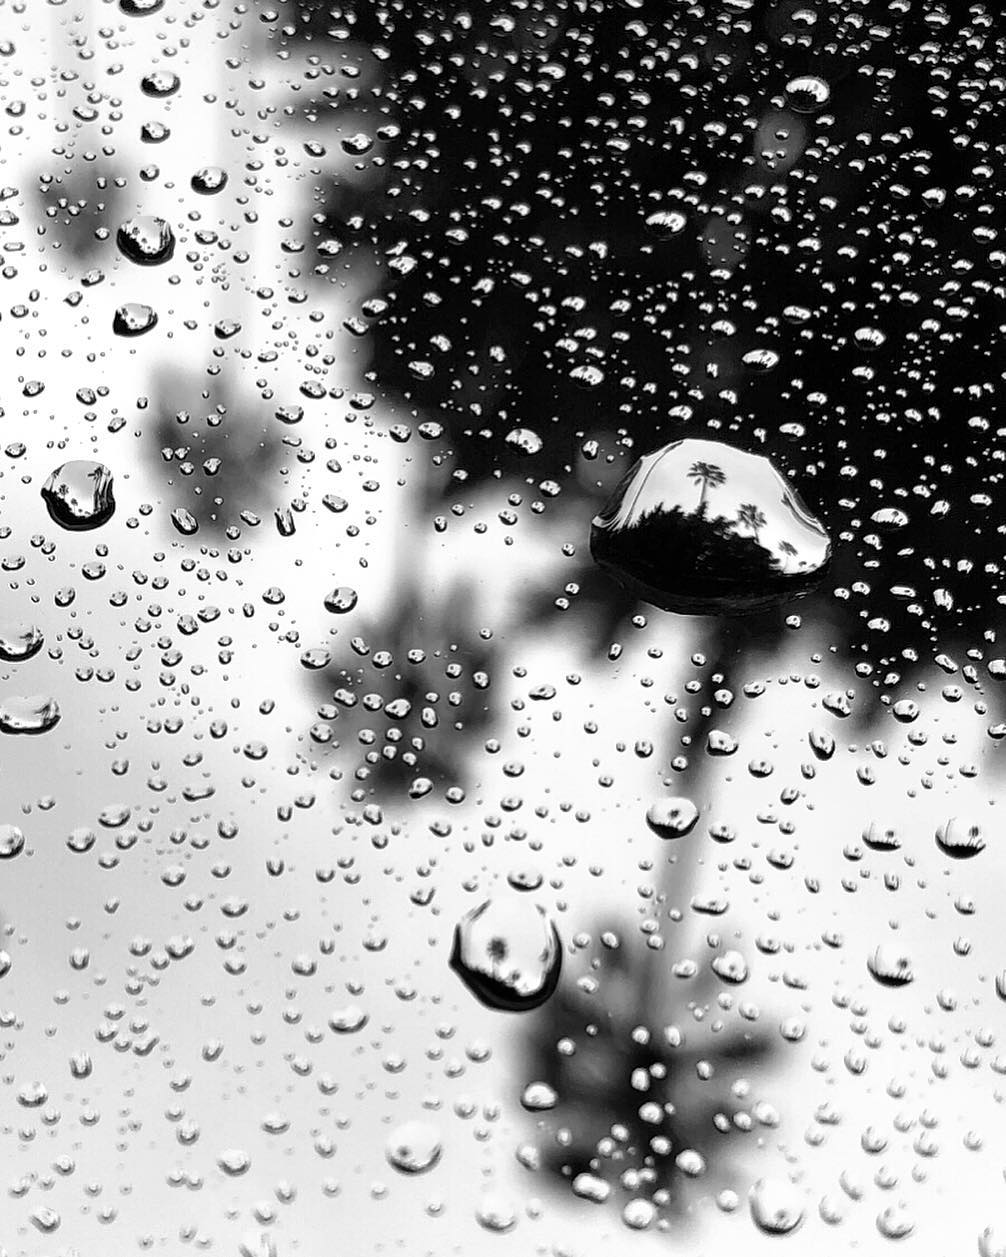 Mobiography Photo Challenge: 10 Wonderful Rainy Day Inspired Smartphone Photos 4